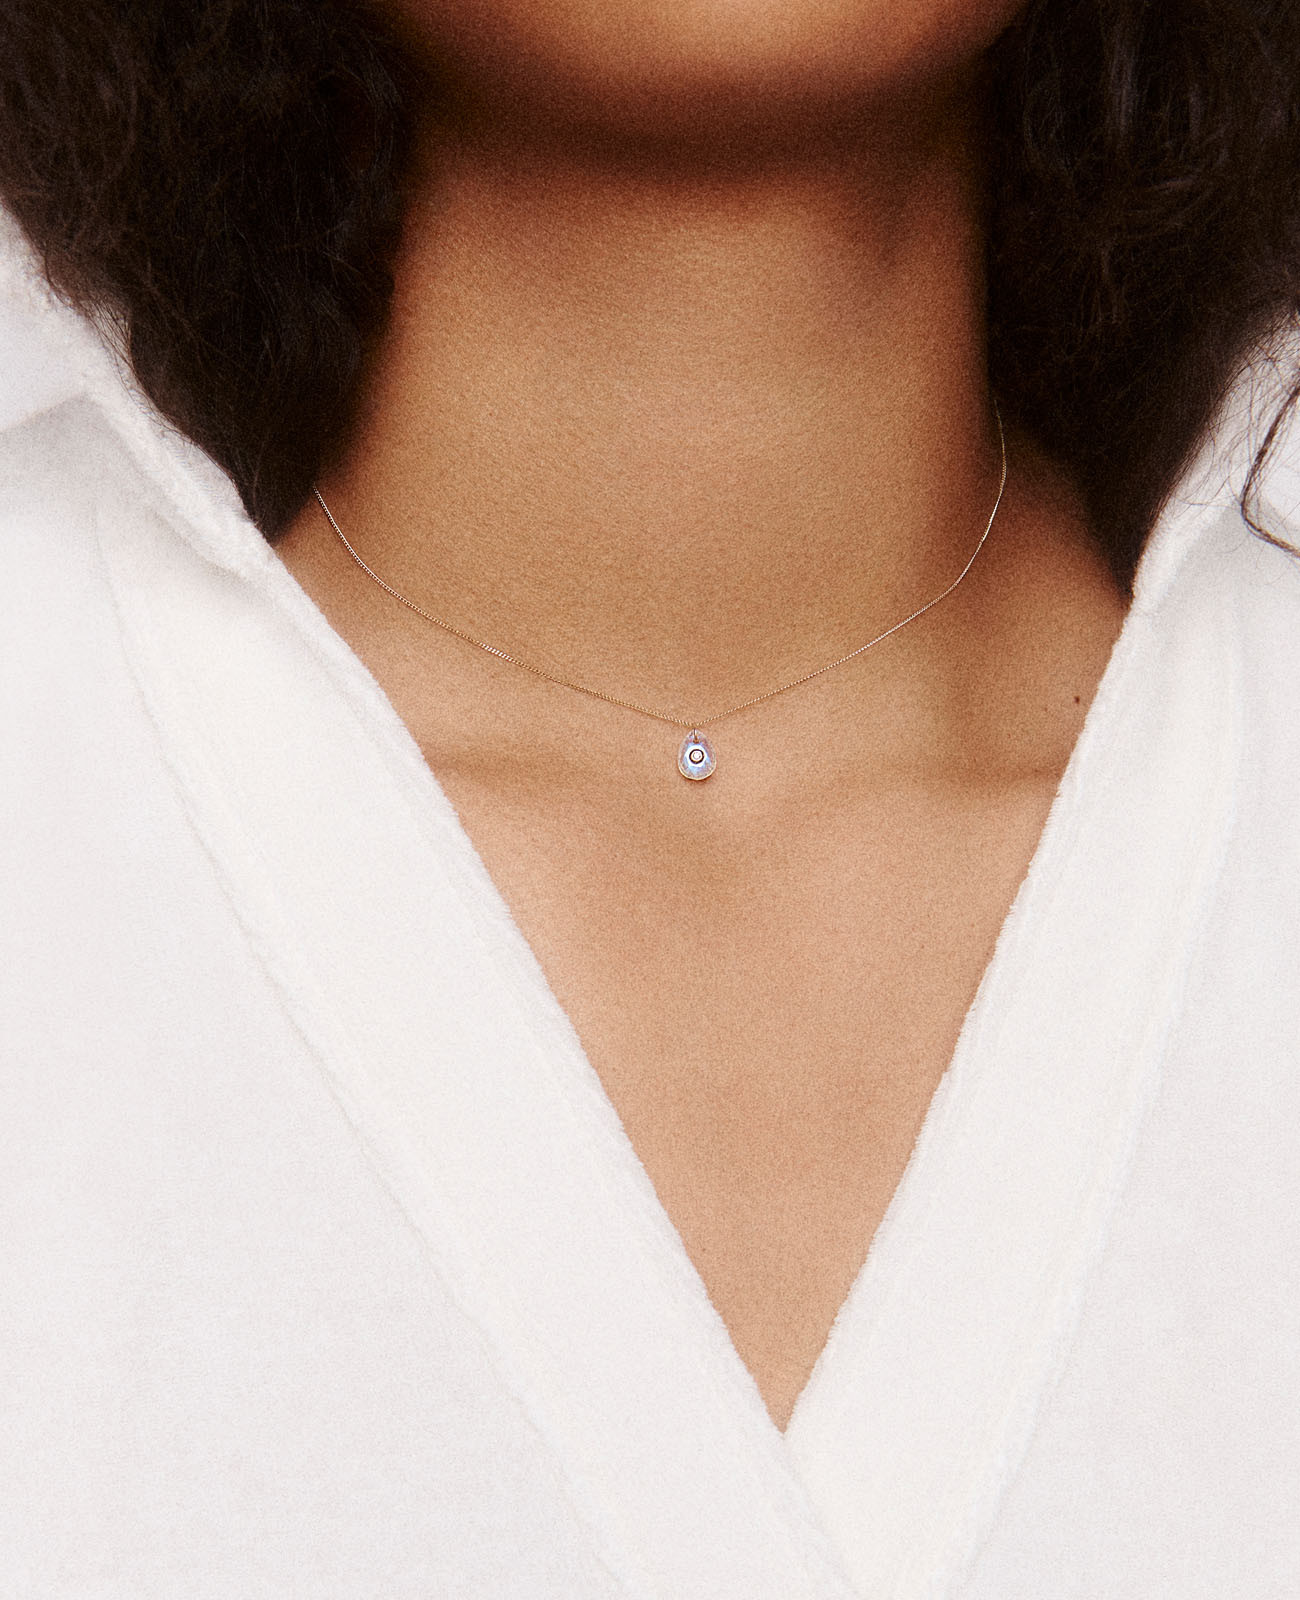 ORSO PURPLE AMETHYST necklace pascale monvoisin jewelry paris